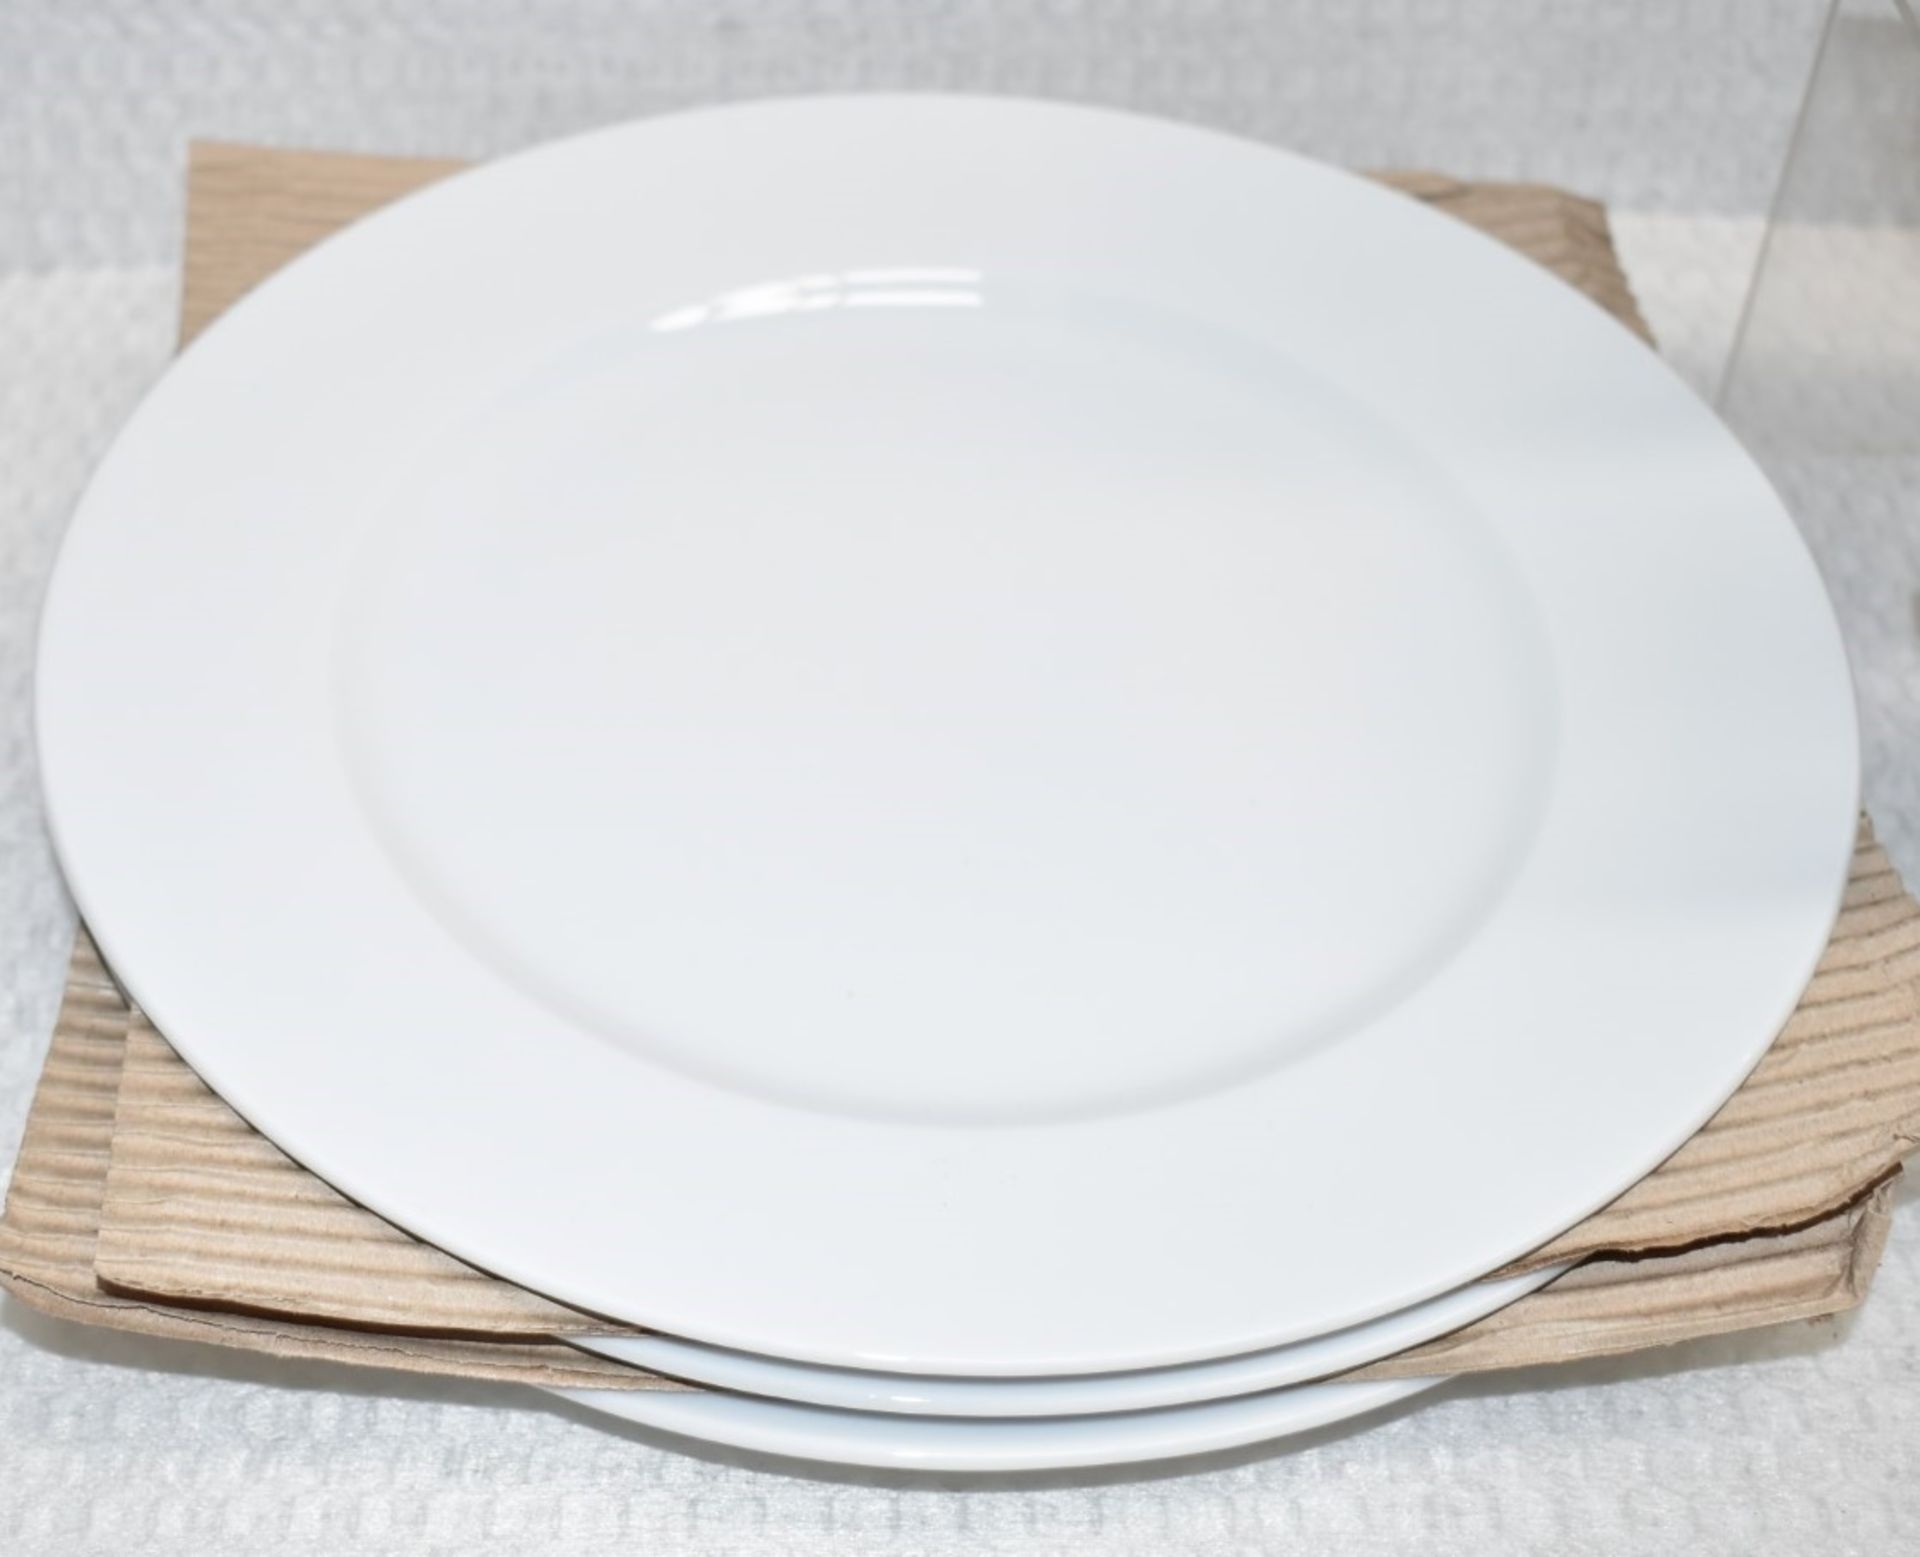 1 x LSA INTERNATIONAL 'Dine' Porcelain 10-Piece Tableware Set - Original Price £100.00 - Unused - Image 5 of 9